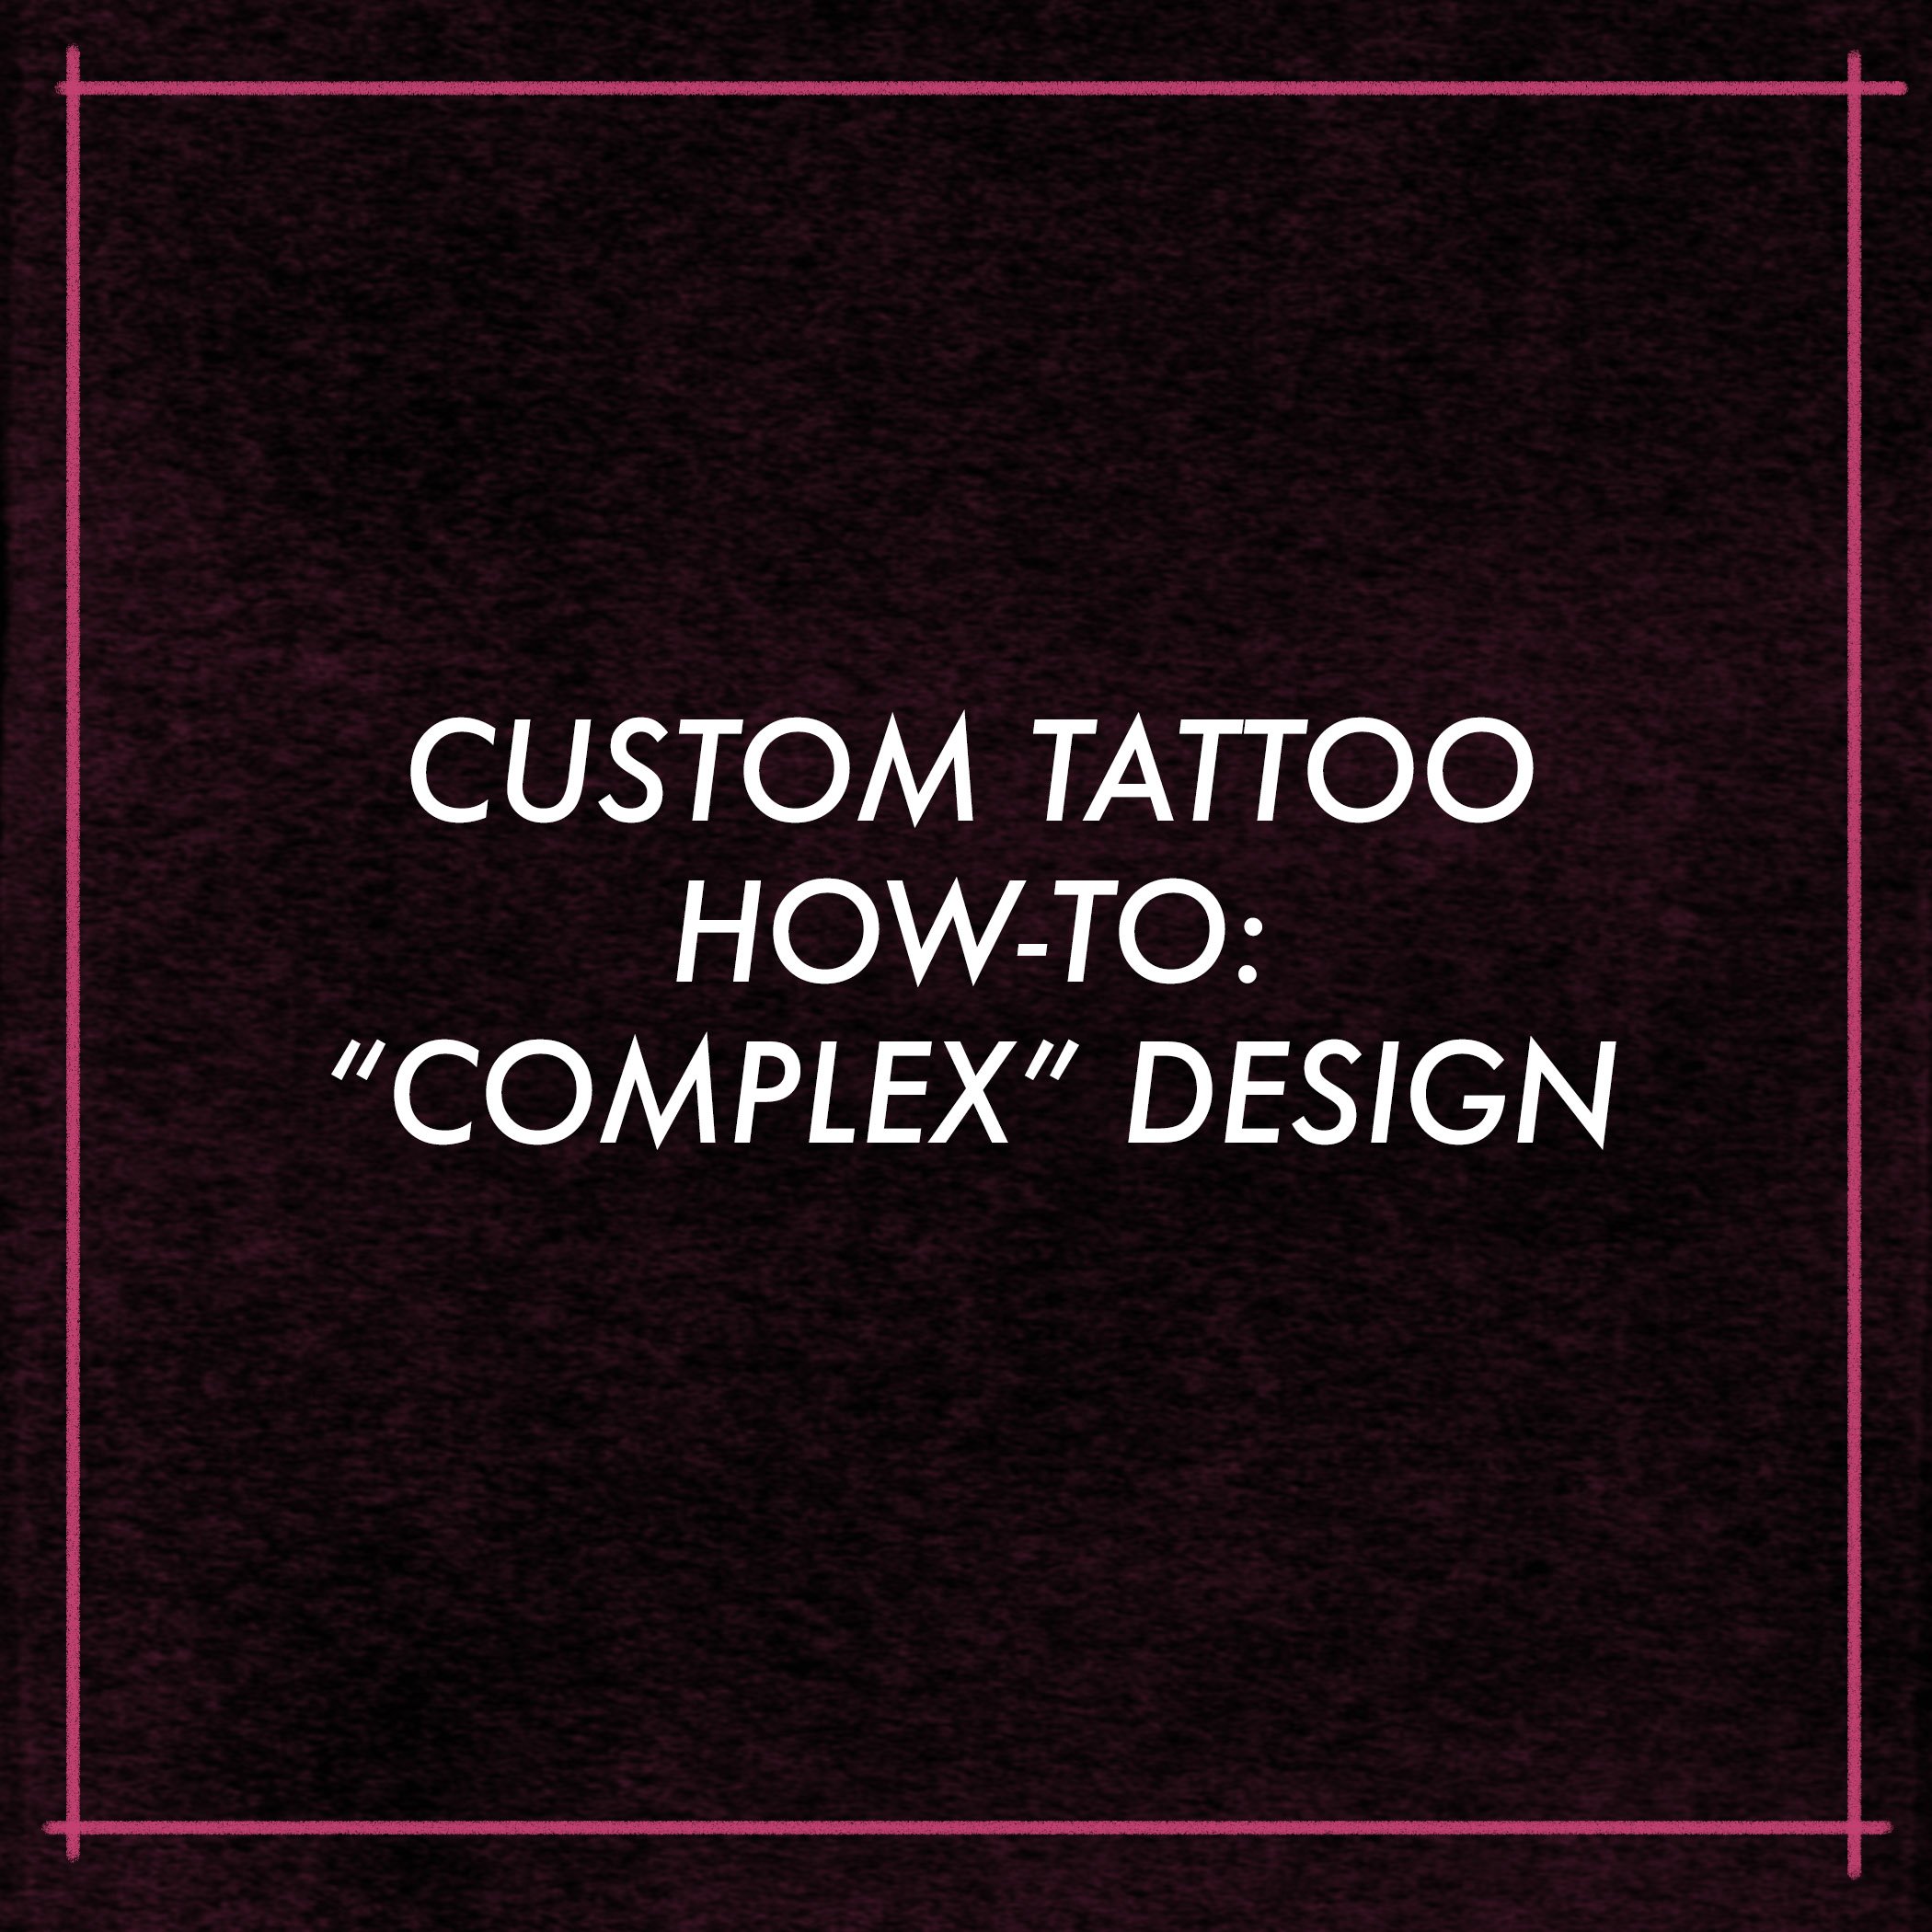 custom tattoo how-to1.jpg